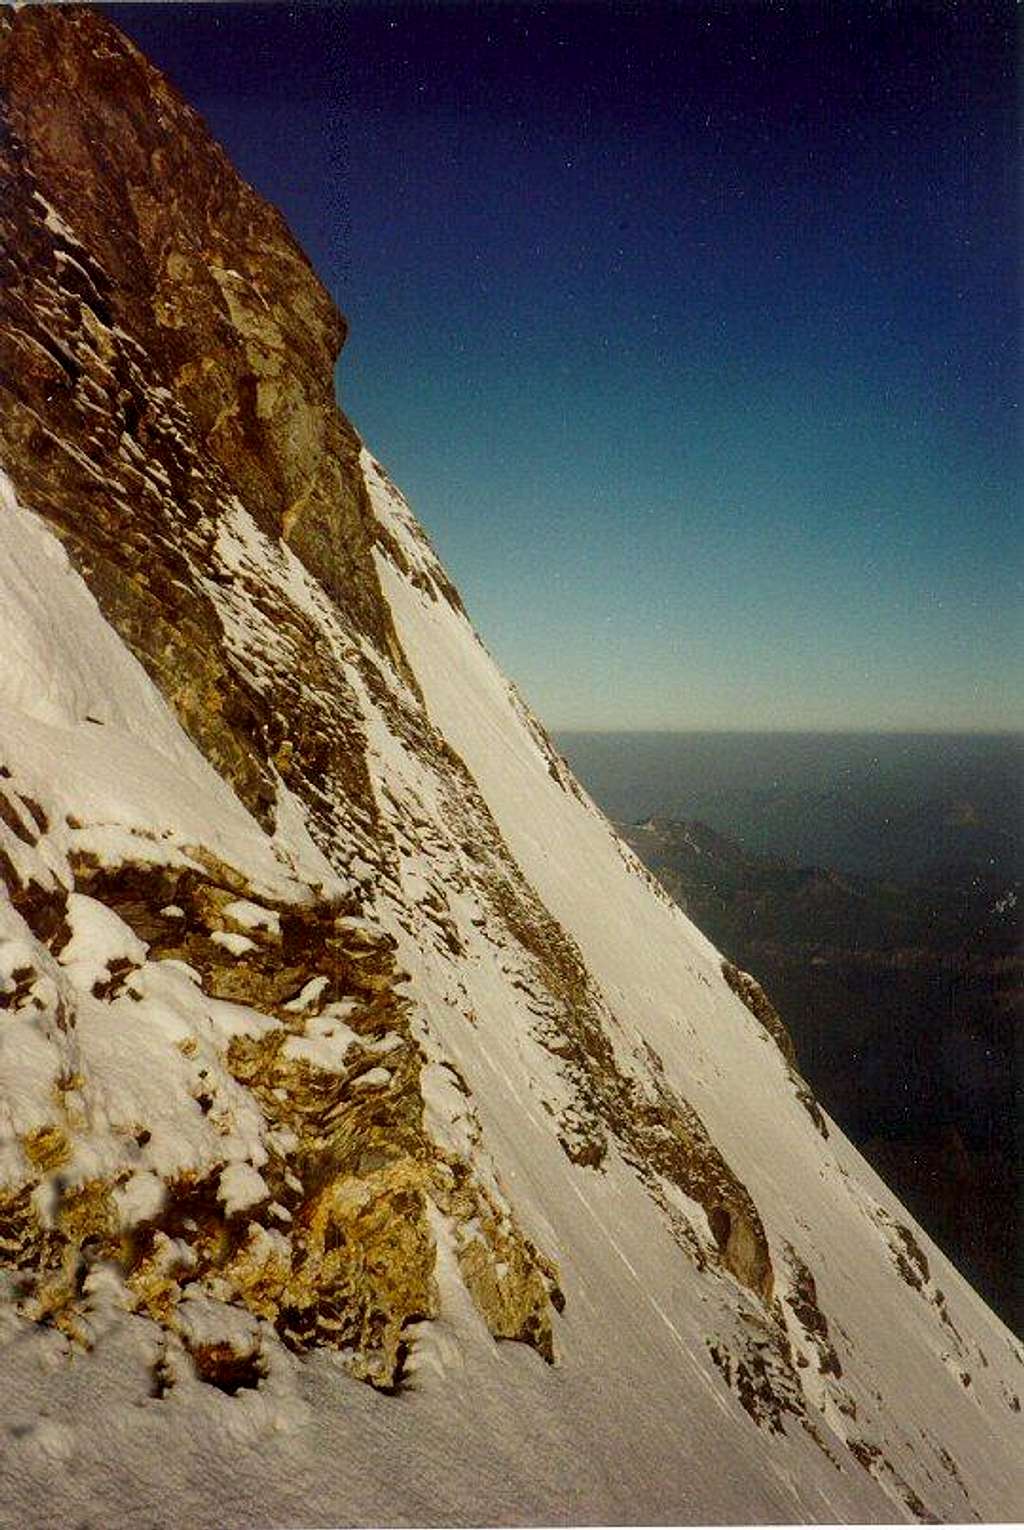 A look at the NE-face from the Mittelegi ridge